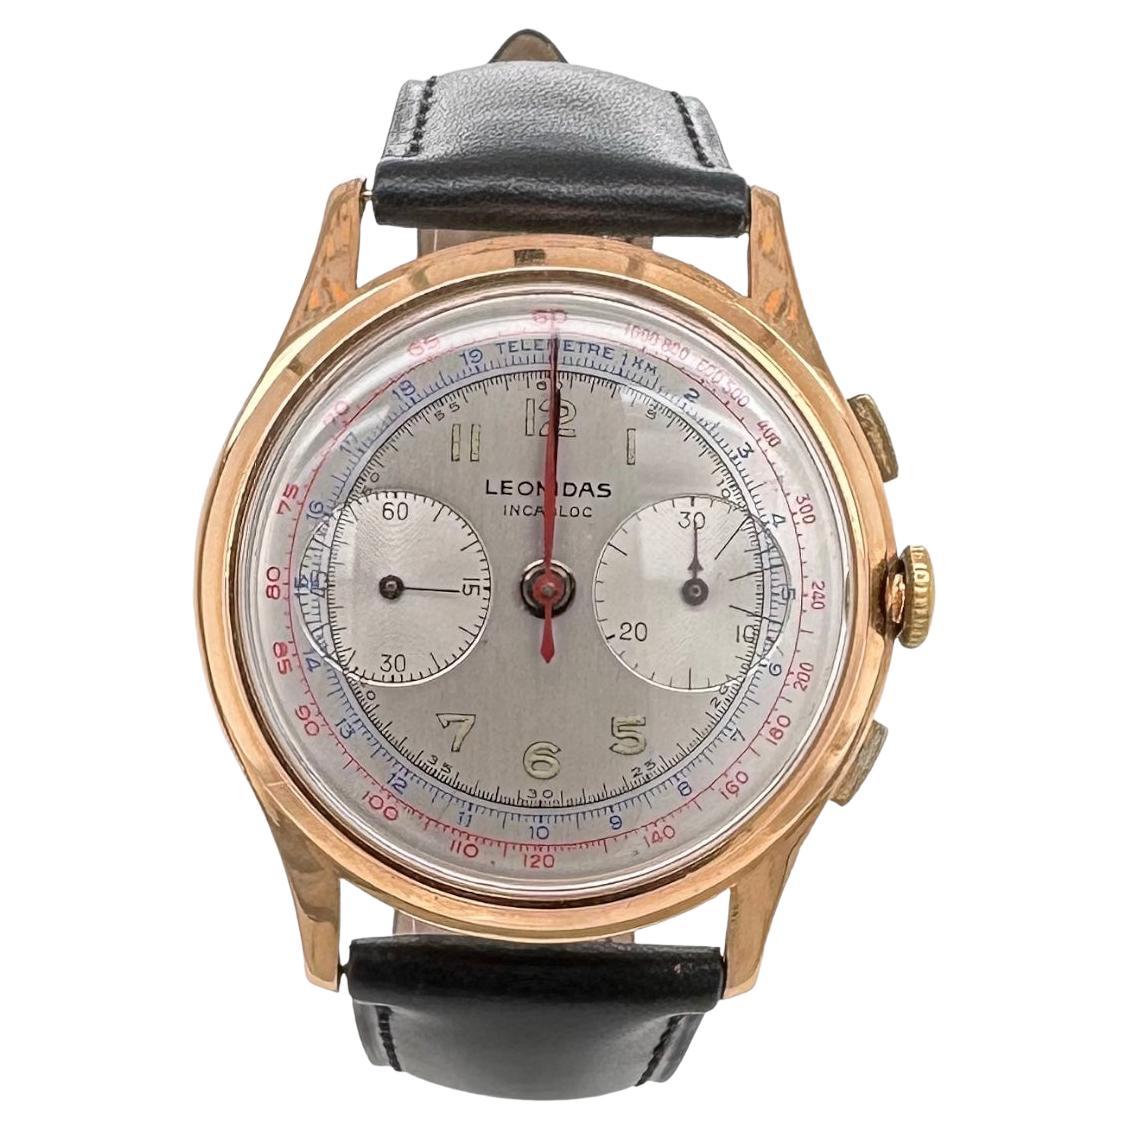 Leonidas Chronograph Wrist Watch 18 Karat Yellow Gold Case